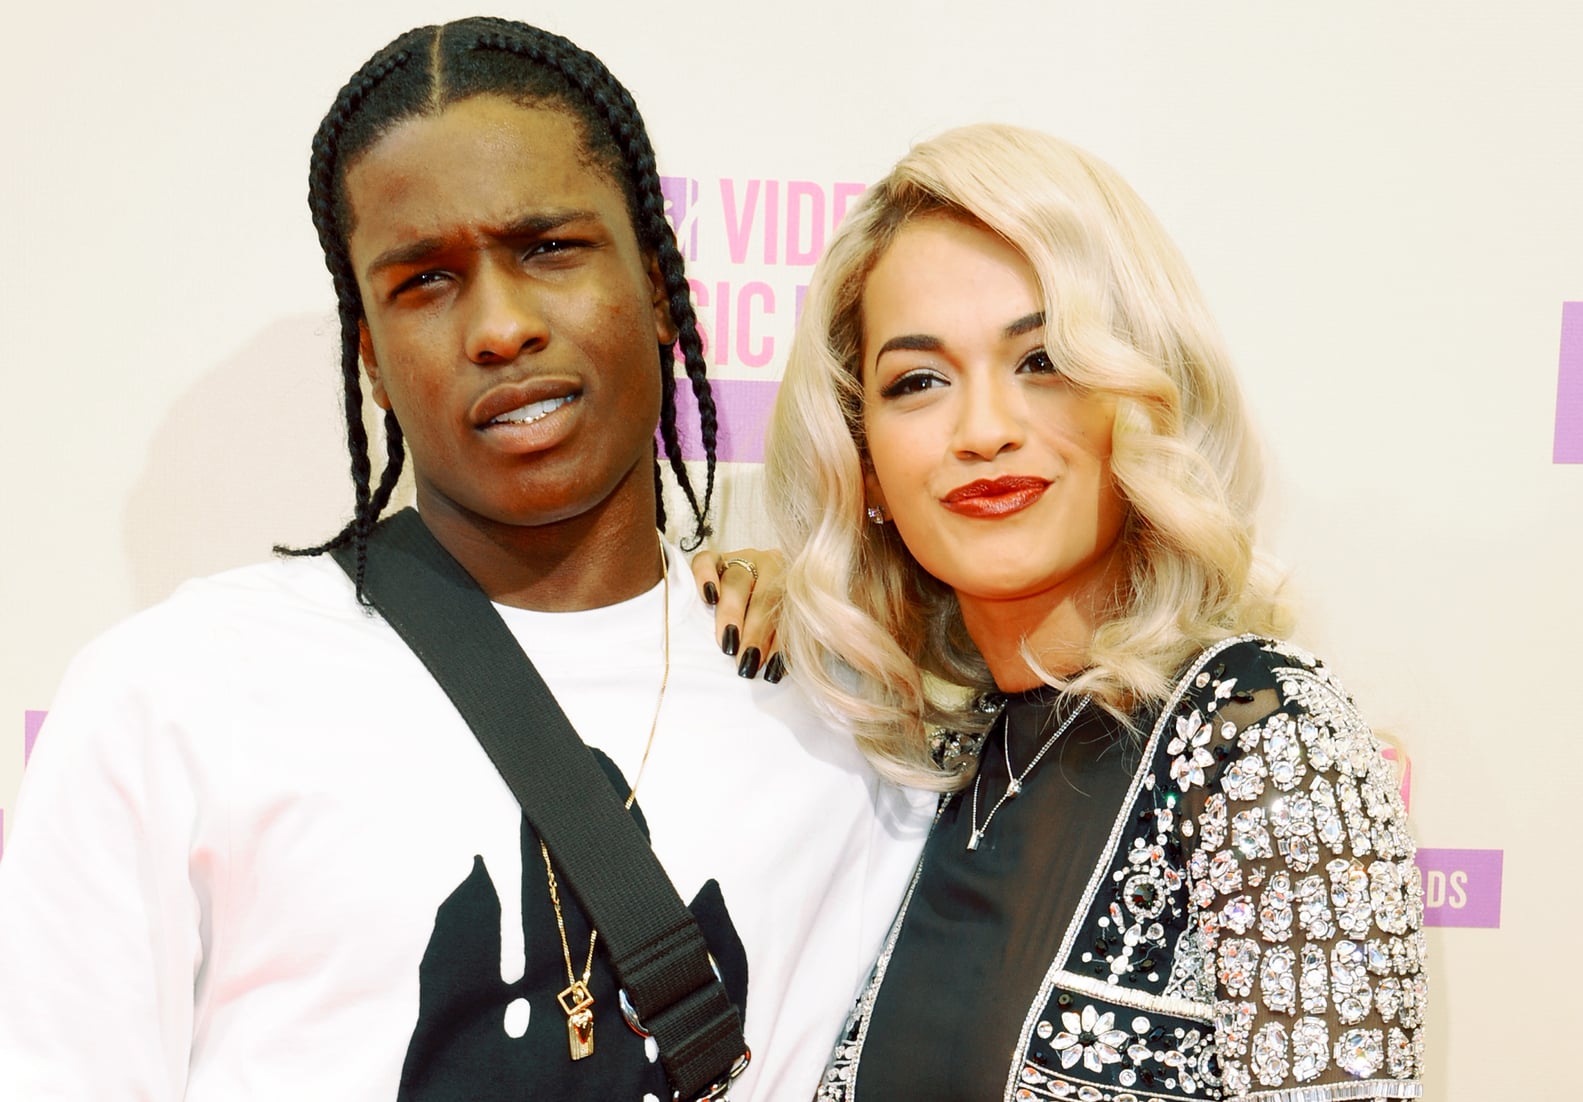 Who Has A$AP Rocky Dated? | POPSUGAR Celebrity